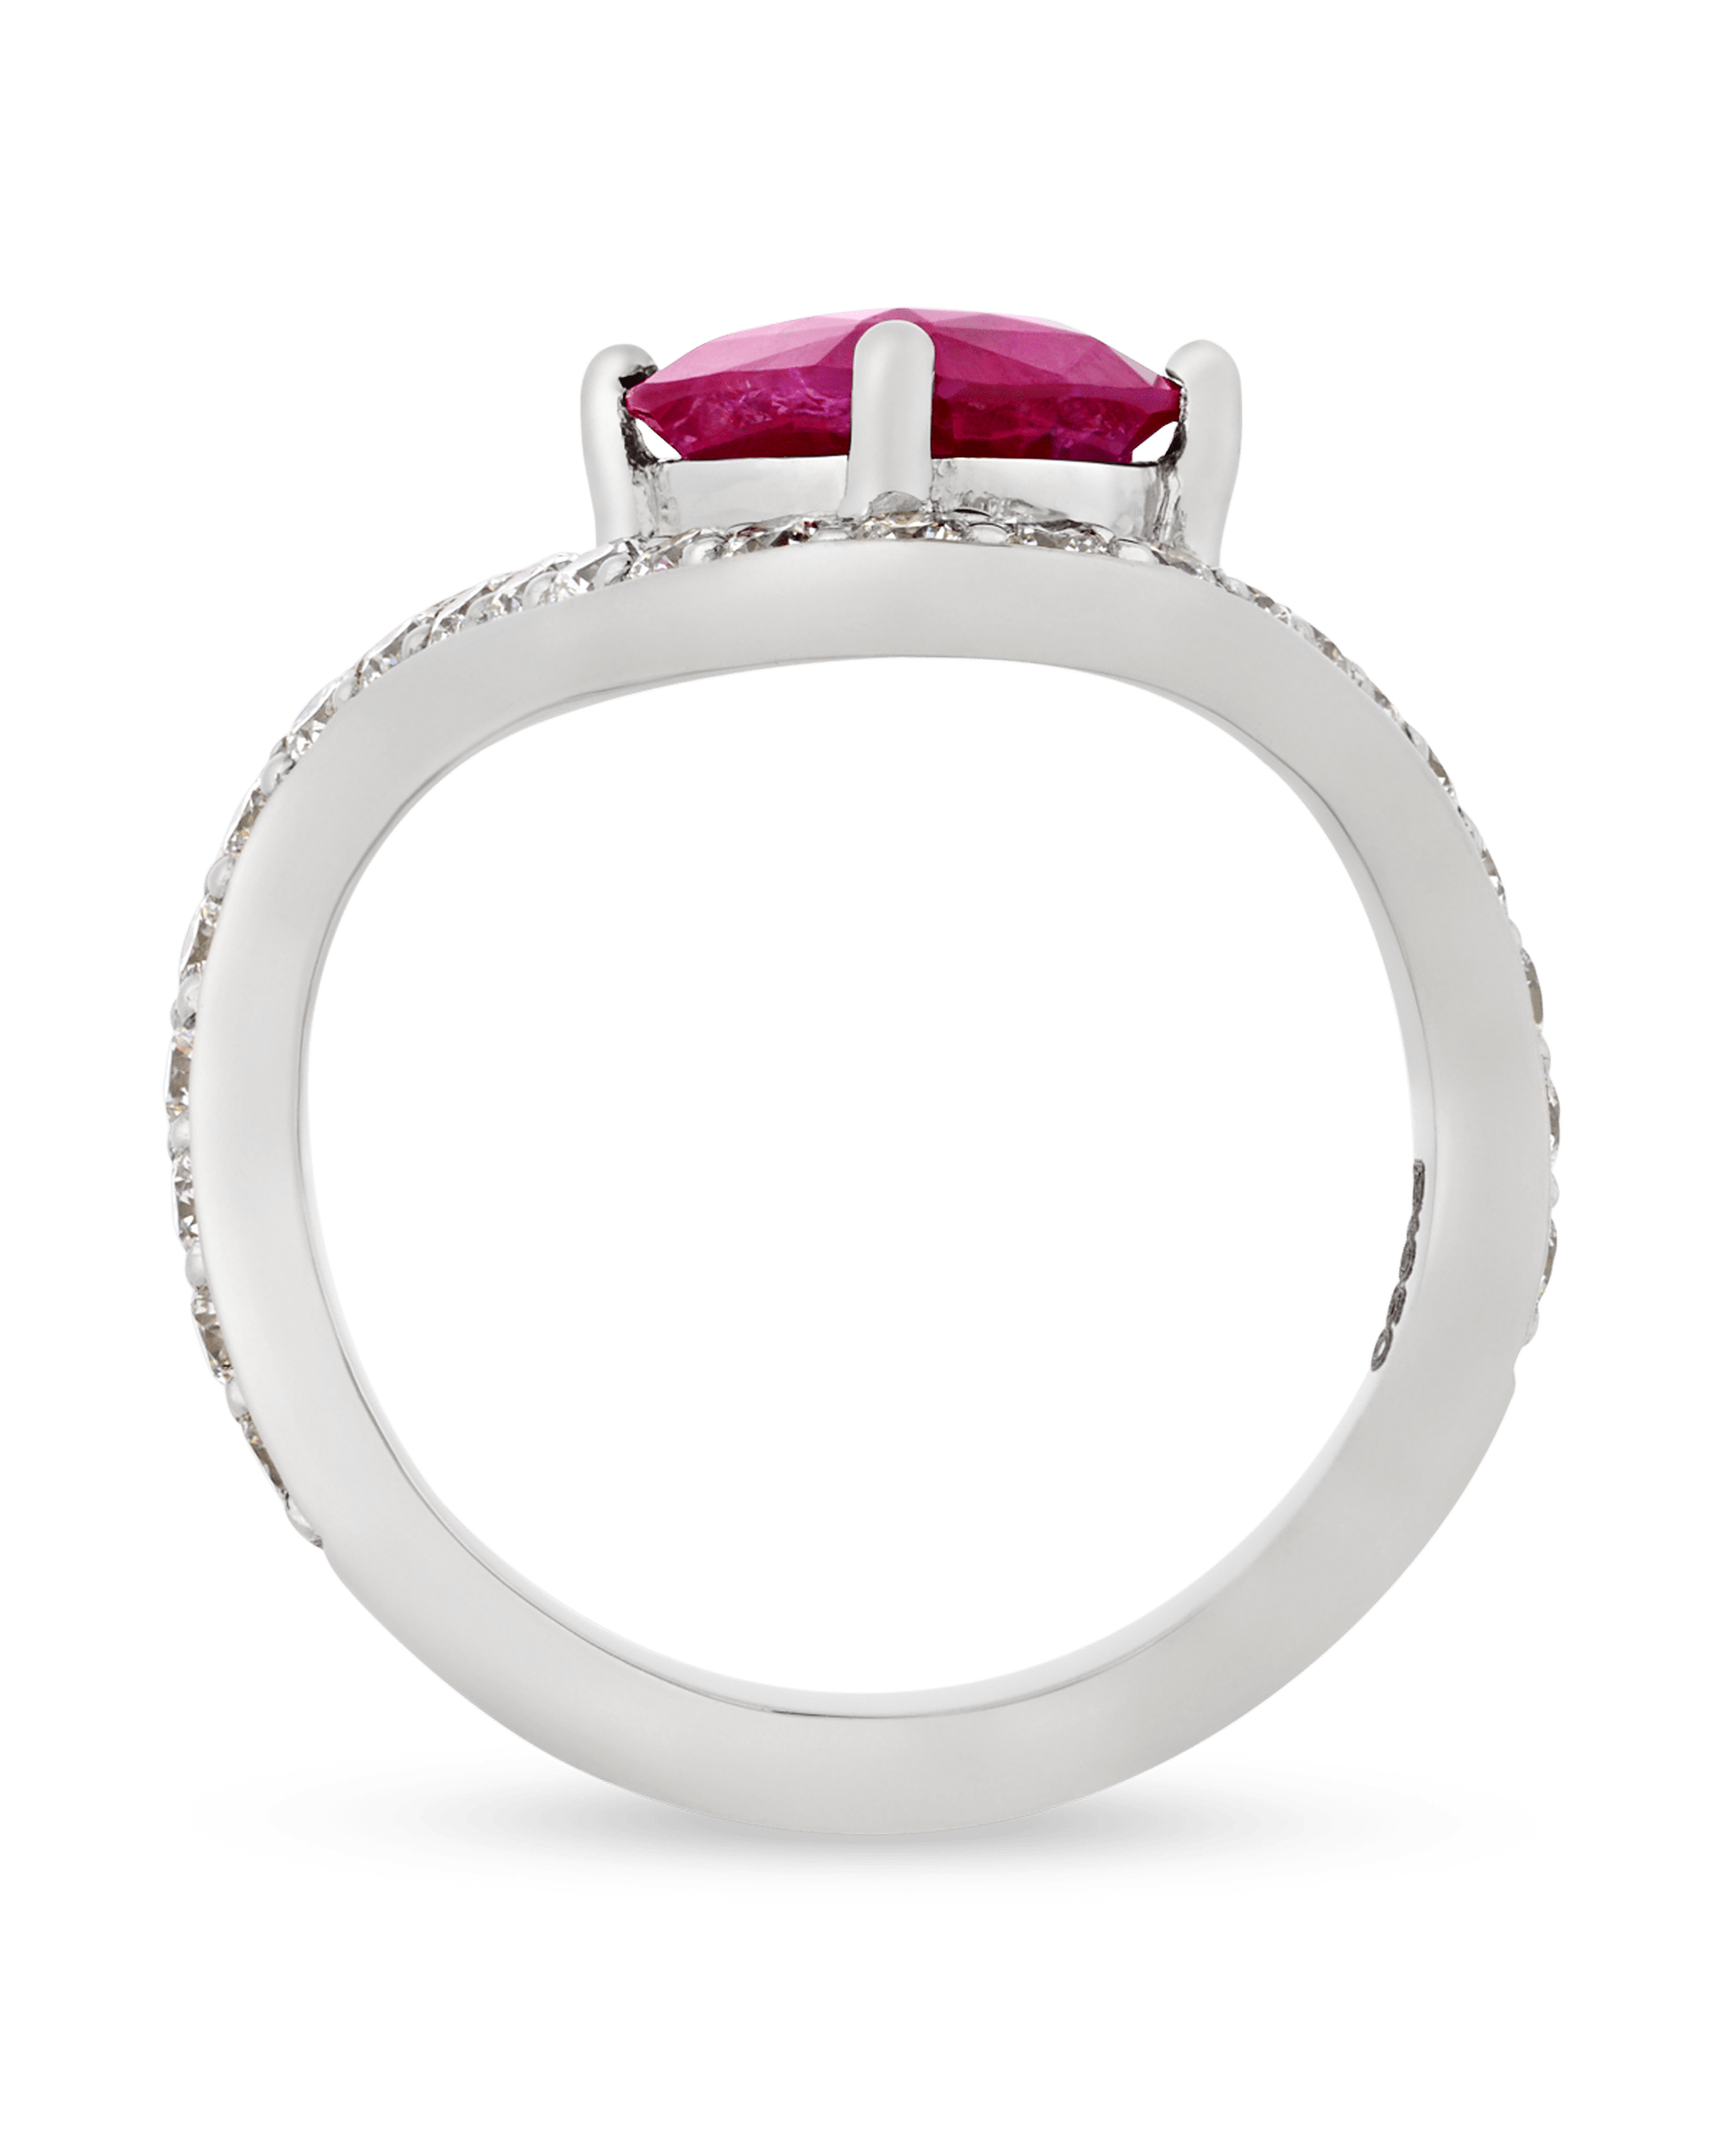 Burma Ruby Ring, 2.39 Carats